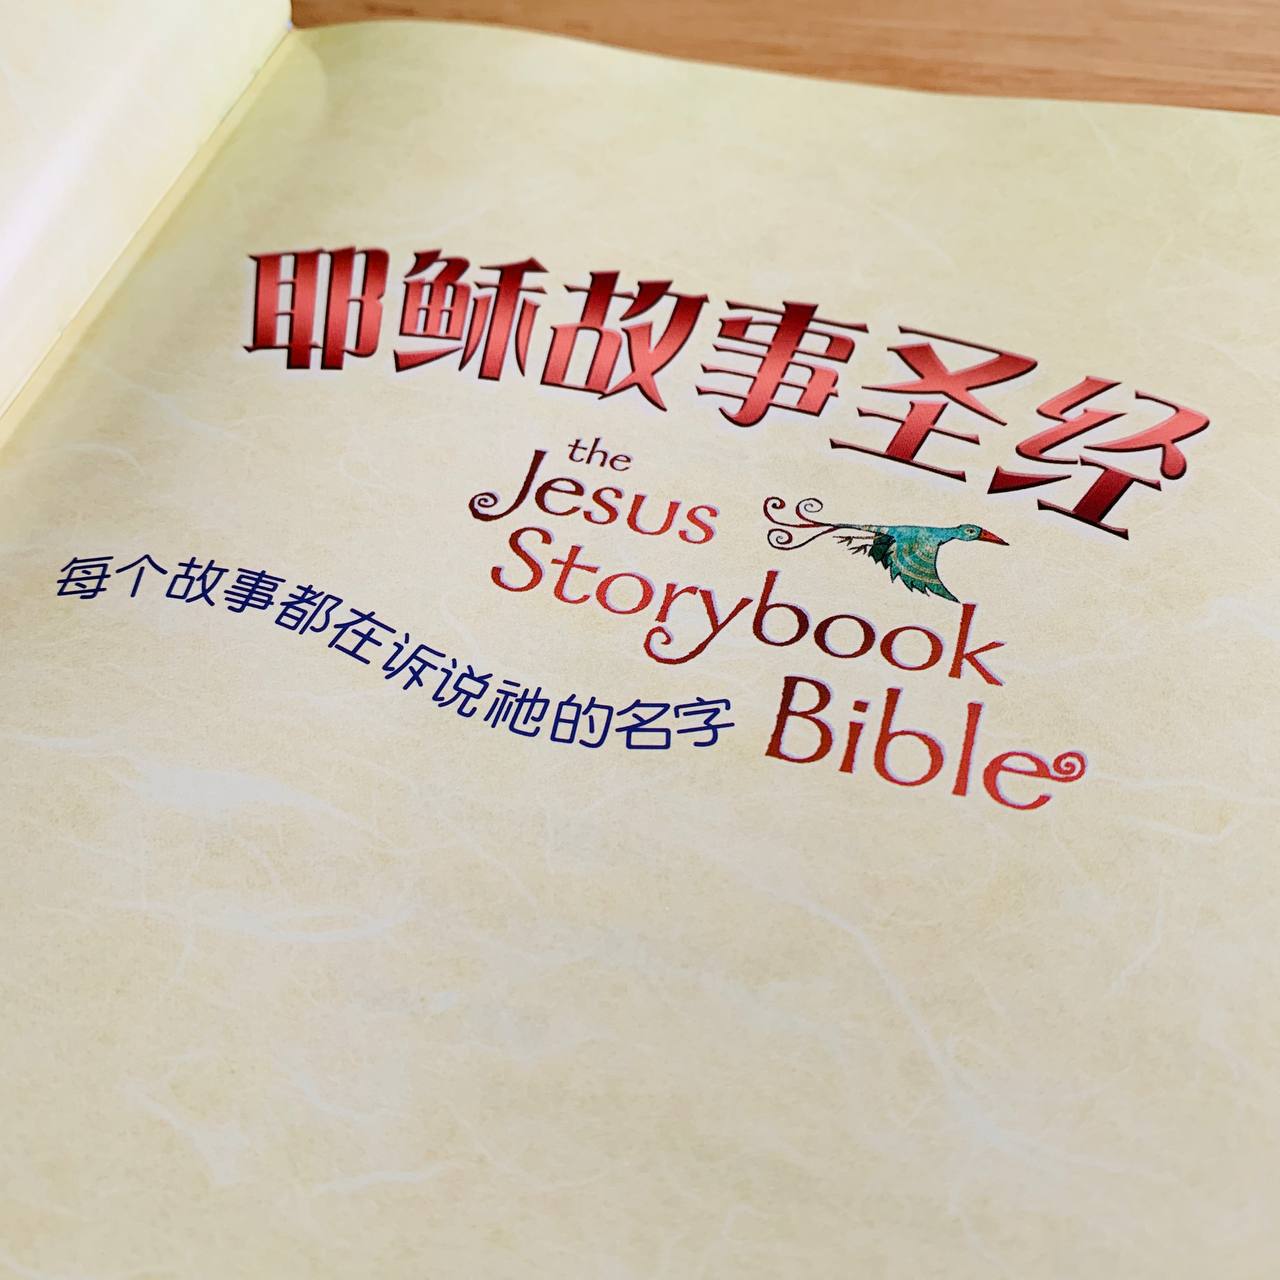 耶稣故事圣经 The Jesus Storybook Bible (Chinese with Hanyu Pinyin)